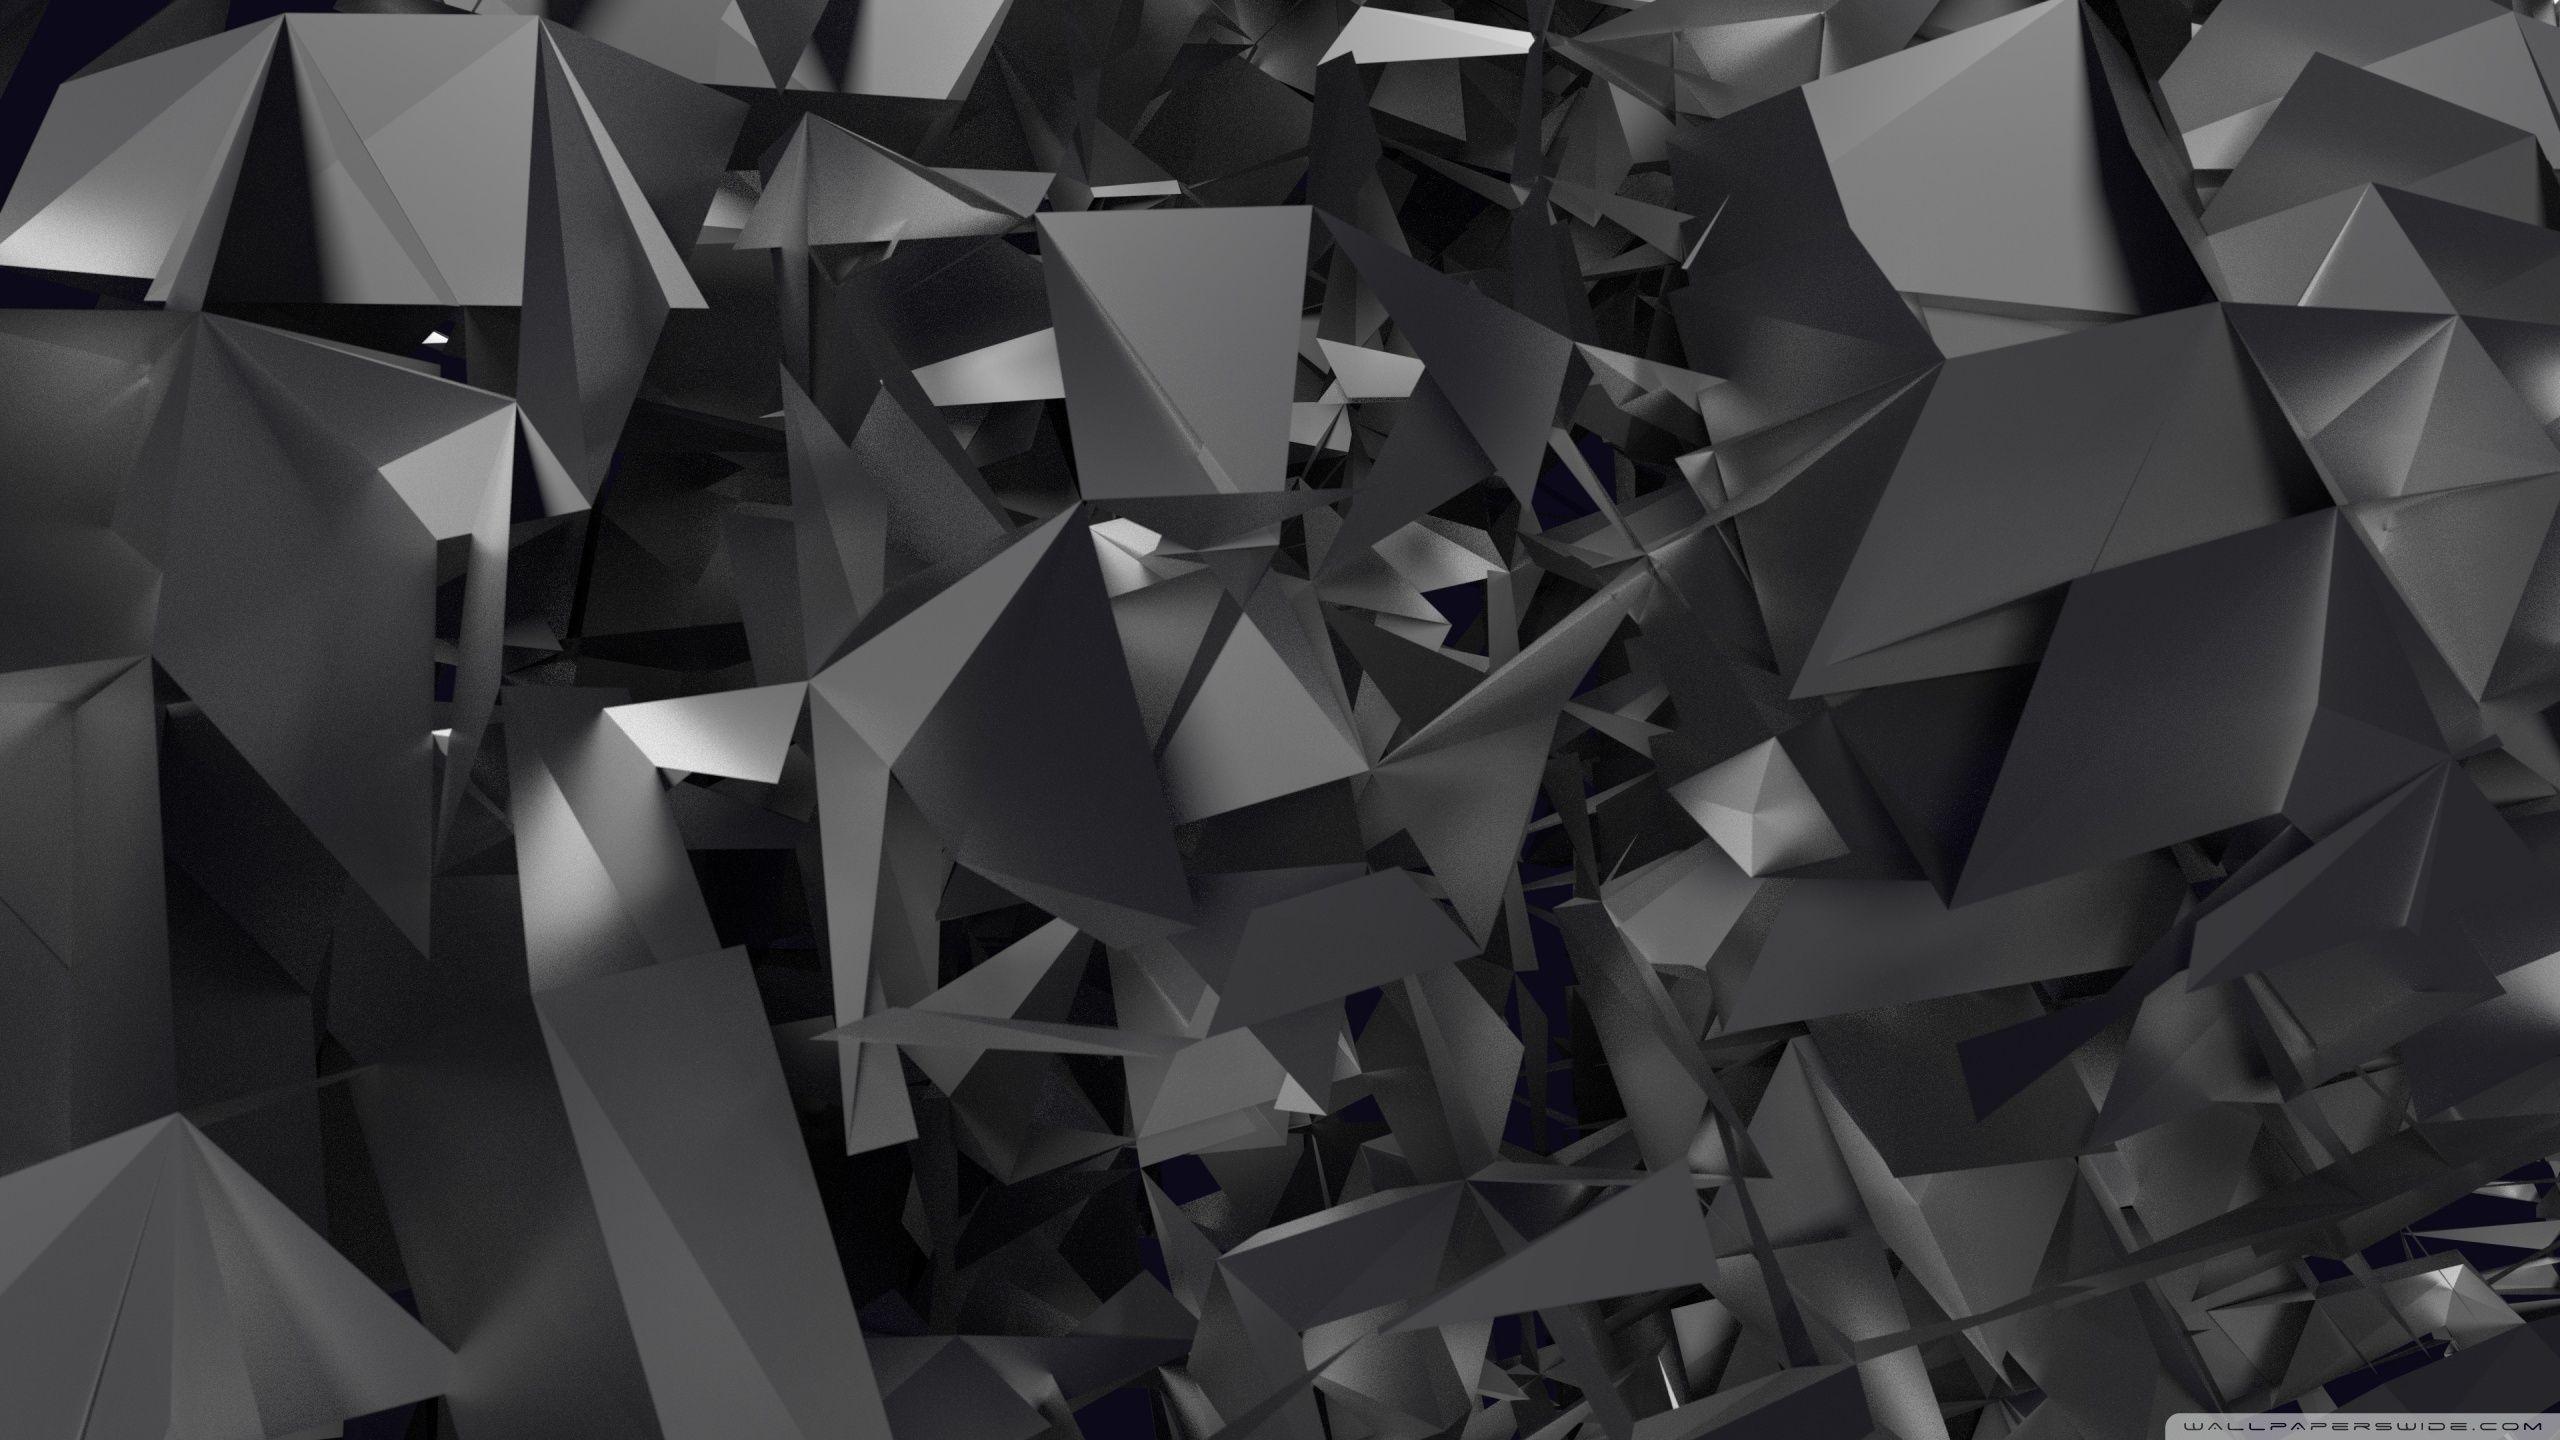 Geometric Shapes Art HD desktop wallpapers : Widescreen